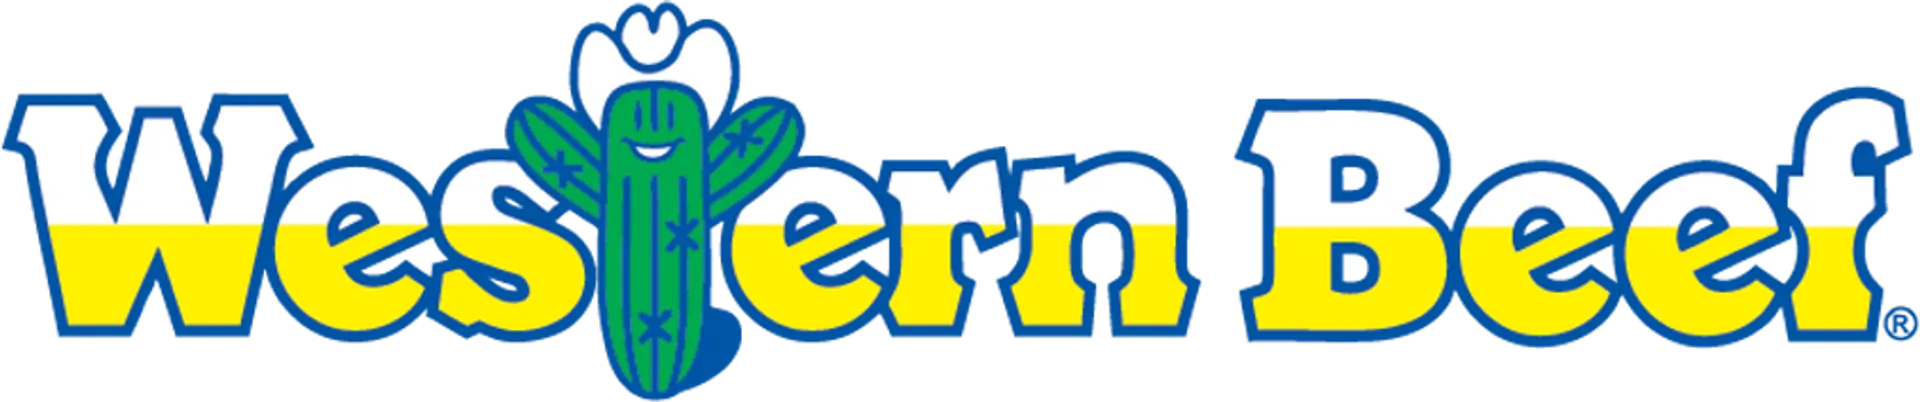 WESTERN BEEF logo